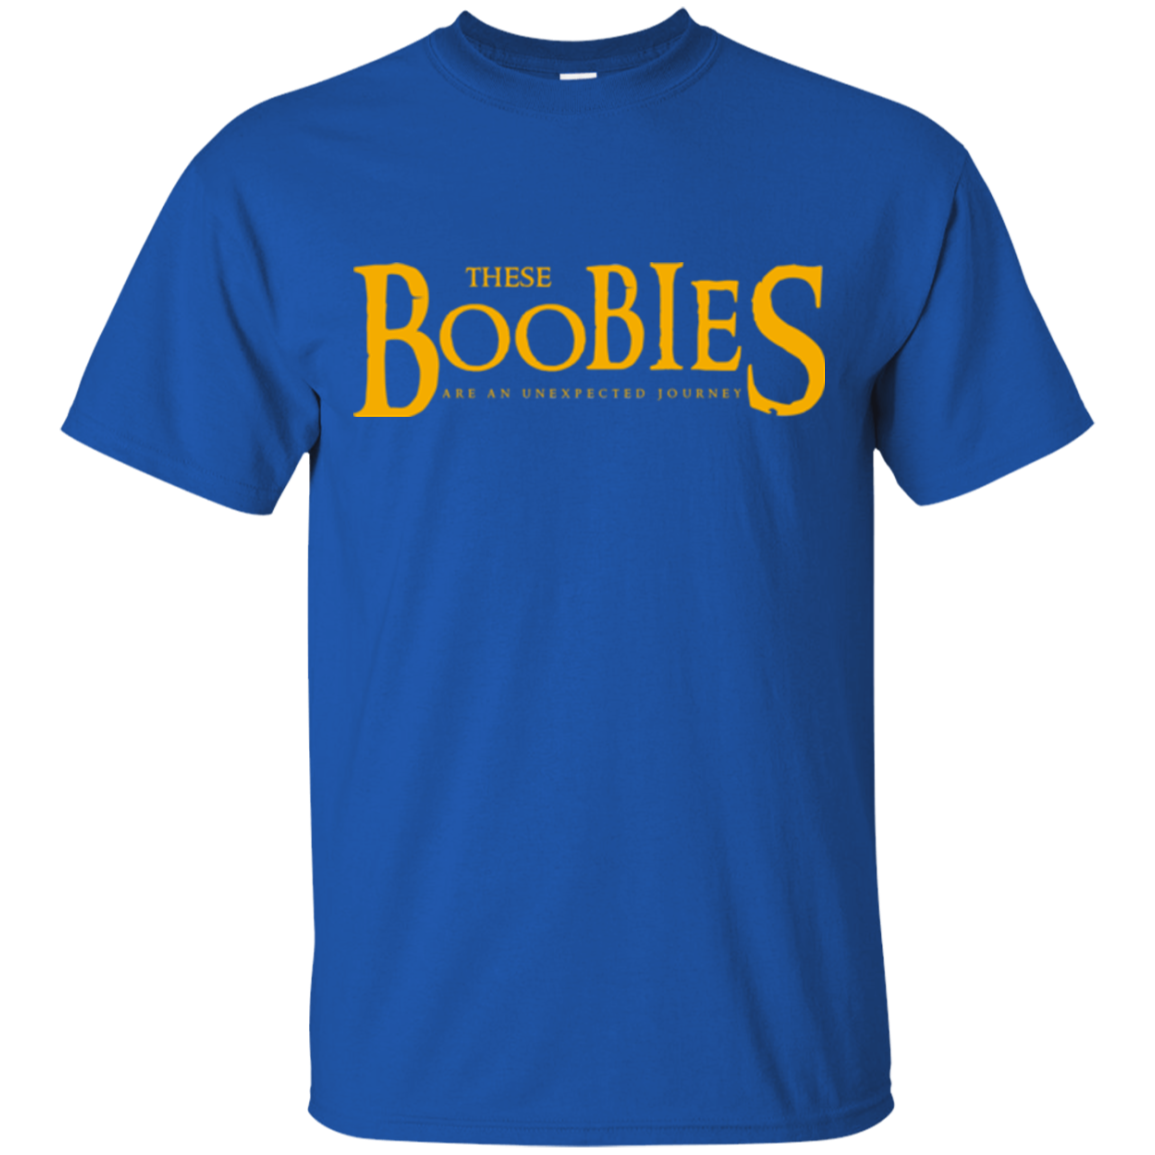 These boobies T-Shirt